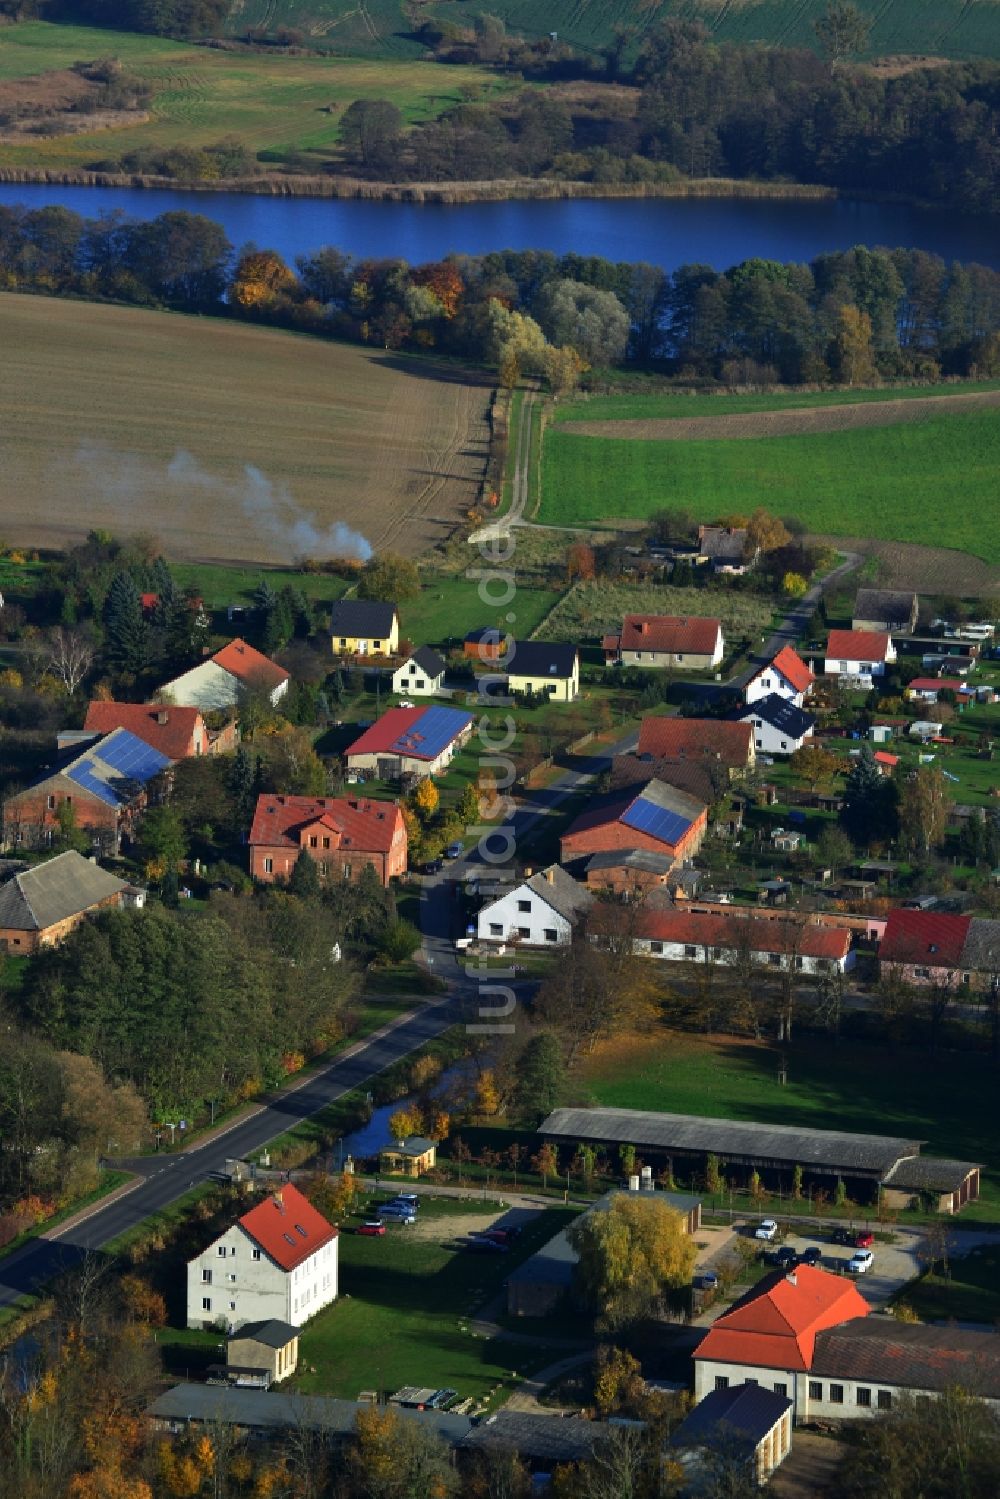 Luftaufnahme Suckow Flieth-Stegelitz - Dorfkern in Suckow Flieth-Stegelitz im Bundesland Brandenburg